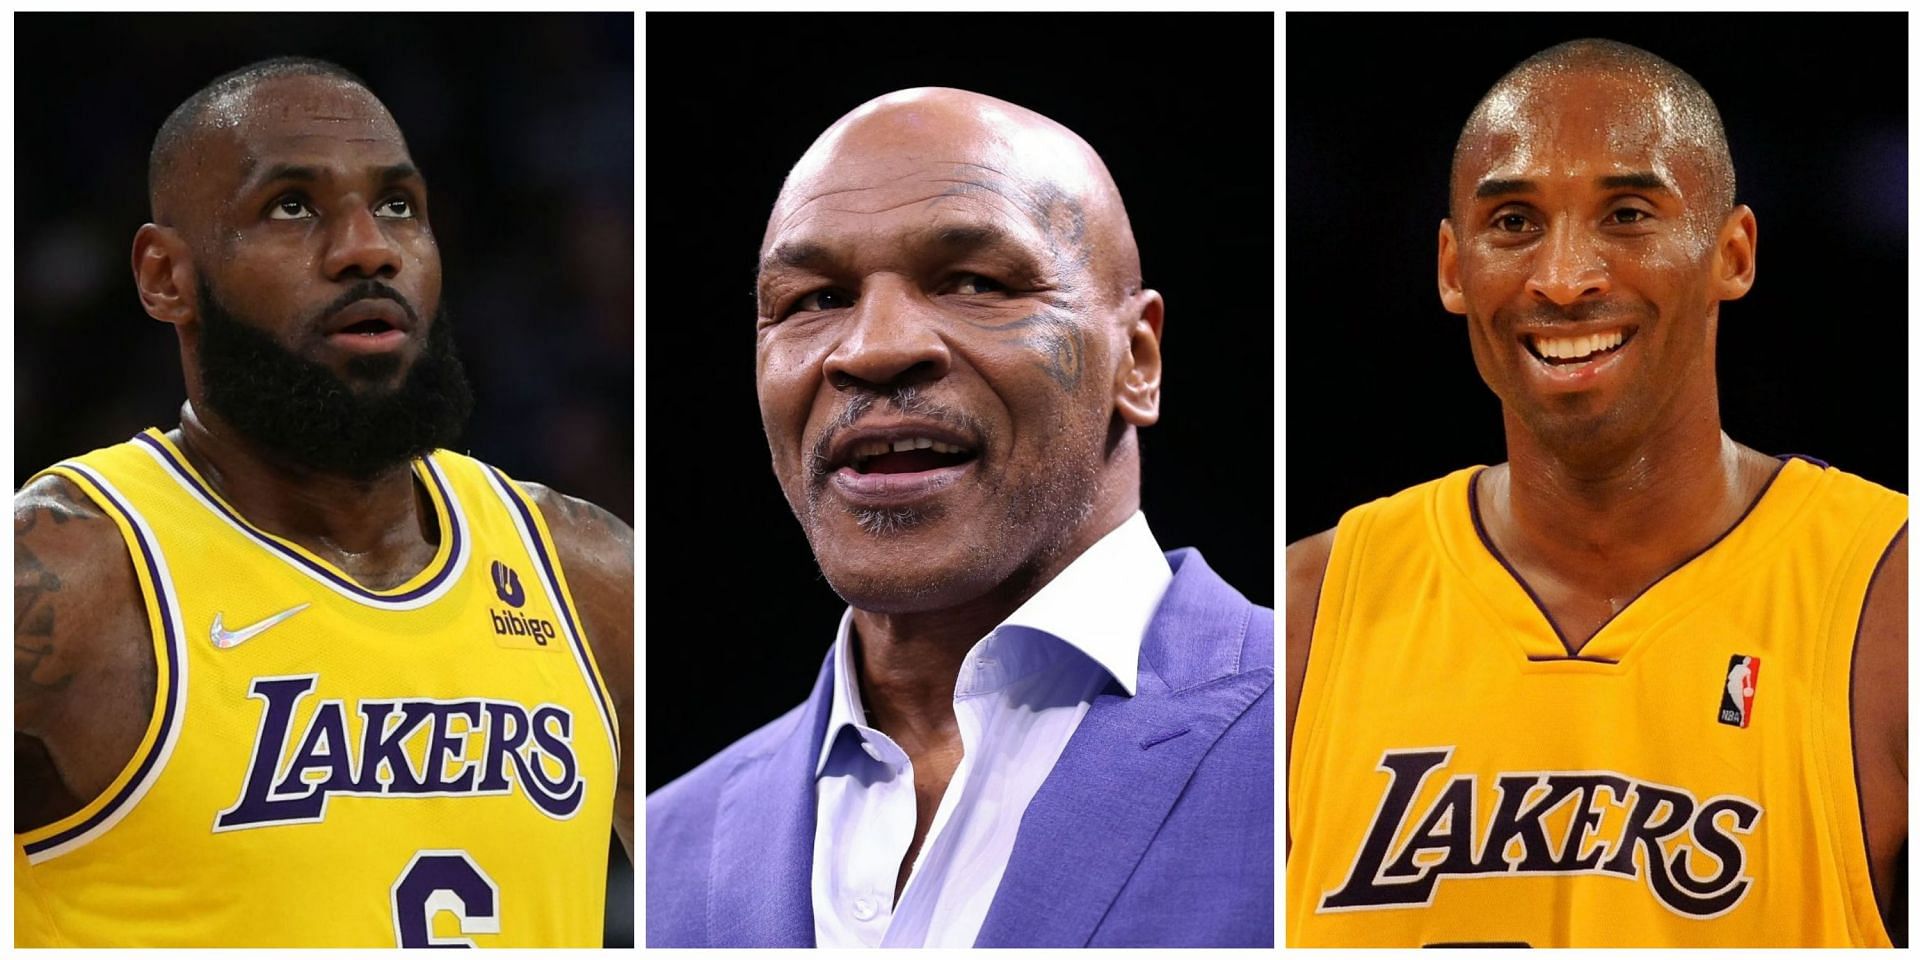 LeBron James, Mike Tyson and Kobe Bryant